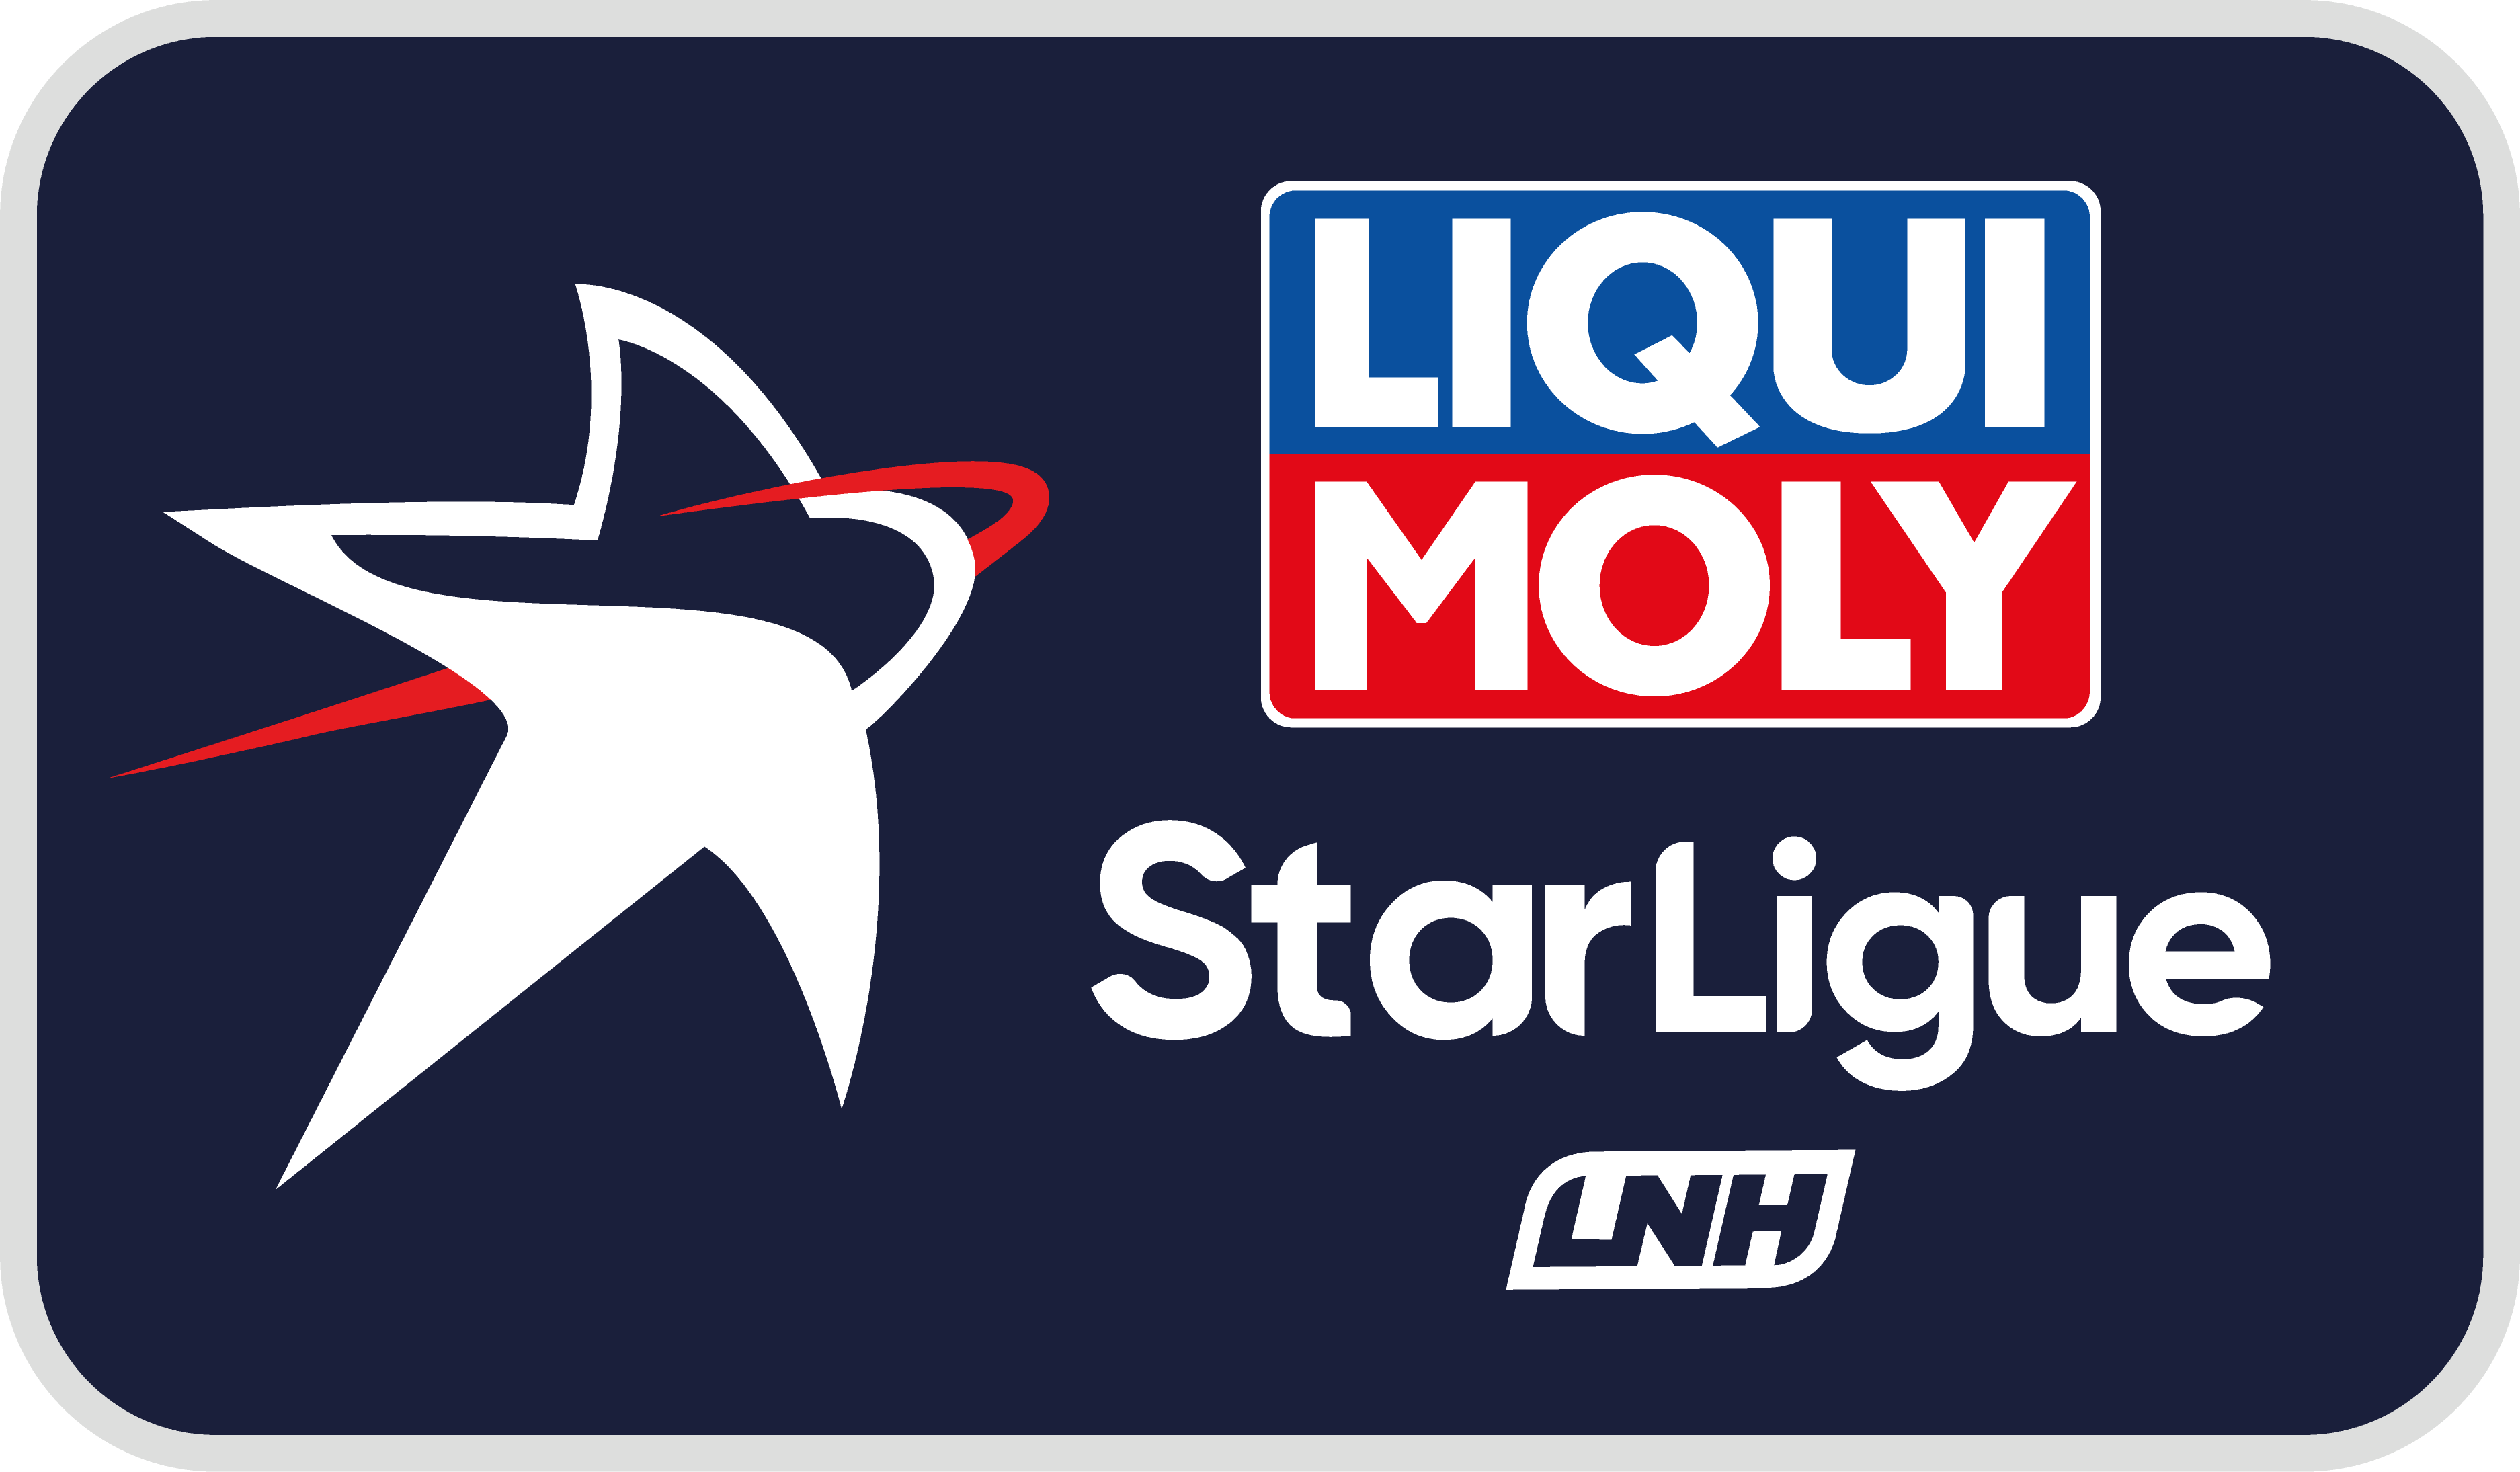 Le Championnat de France devient la Liqui Moly Starligue